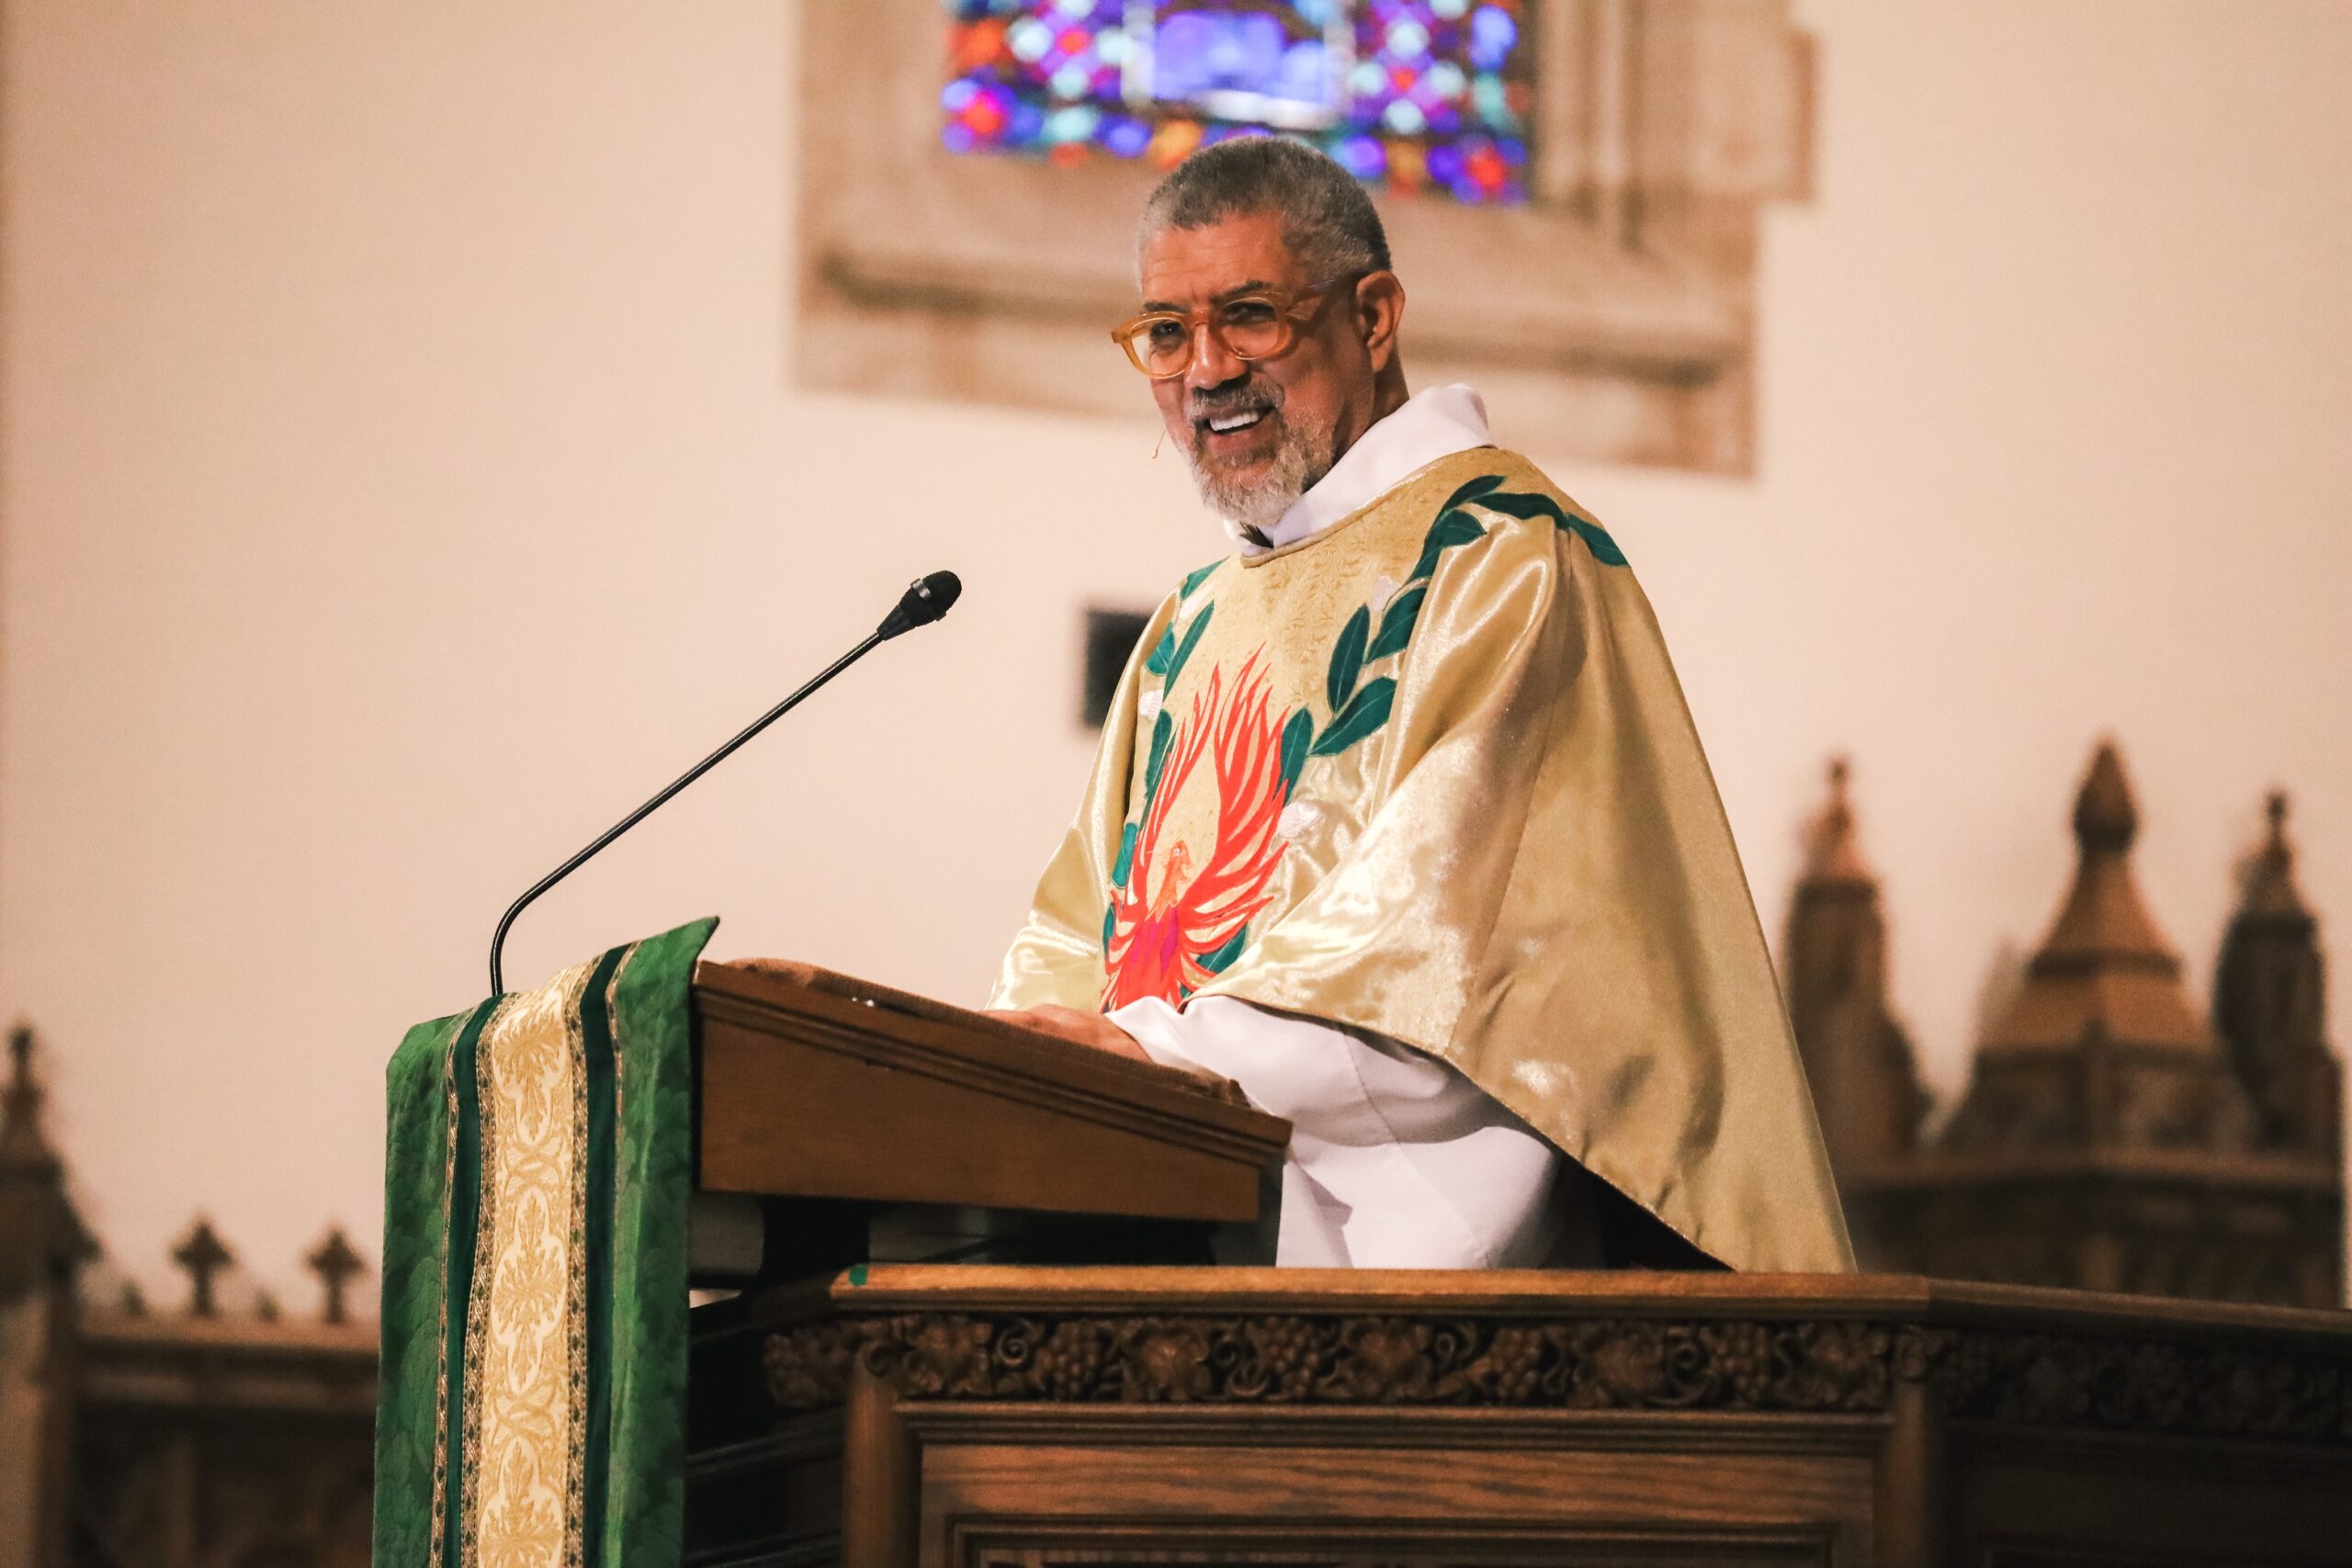 Bishop Wright's Address